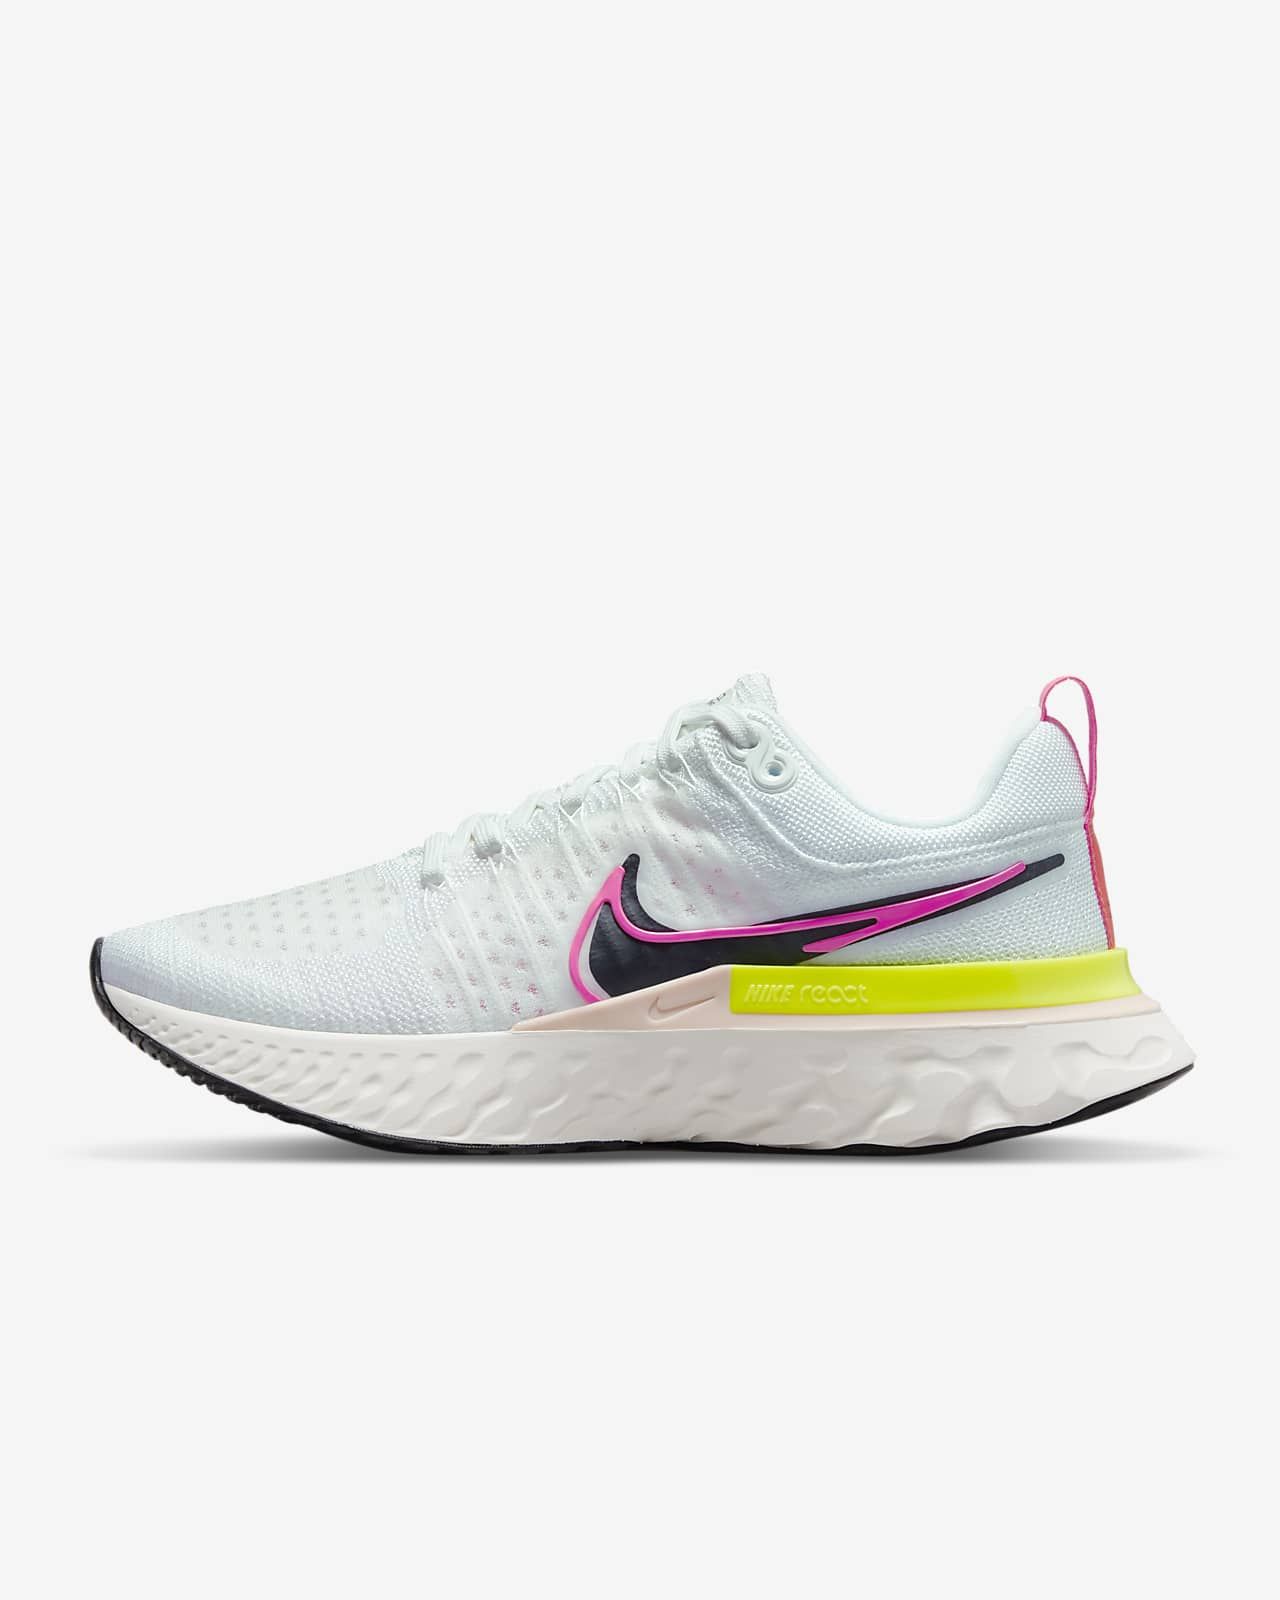 Nike React Infinity Run Flyknit 2Women's Road Running Shoes$100.97$16036% off | Nike (US)